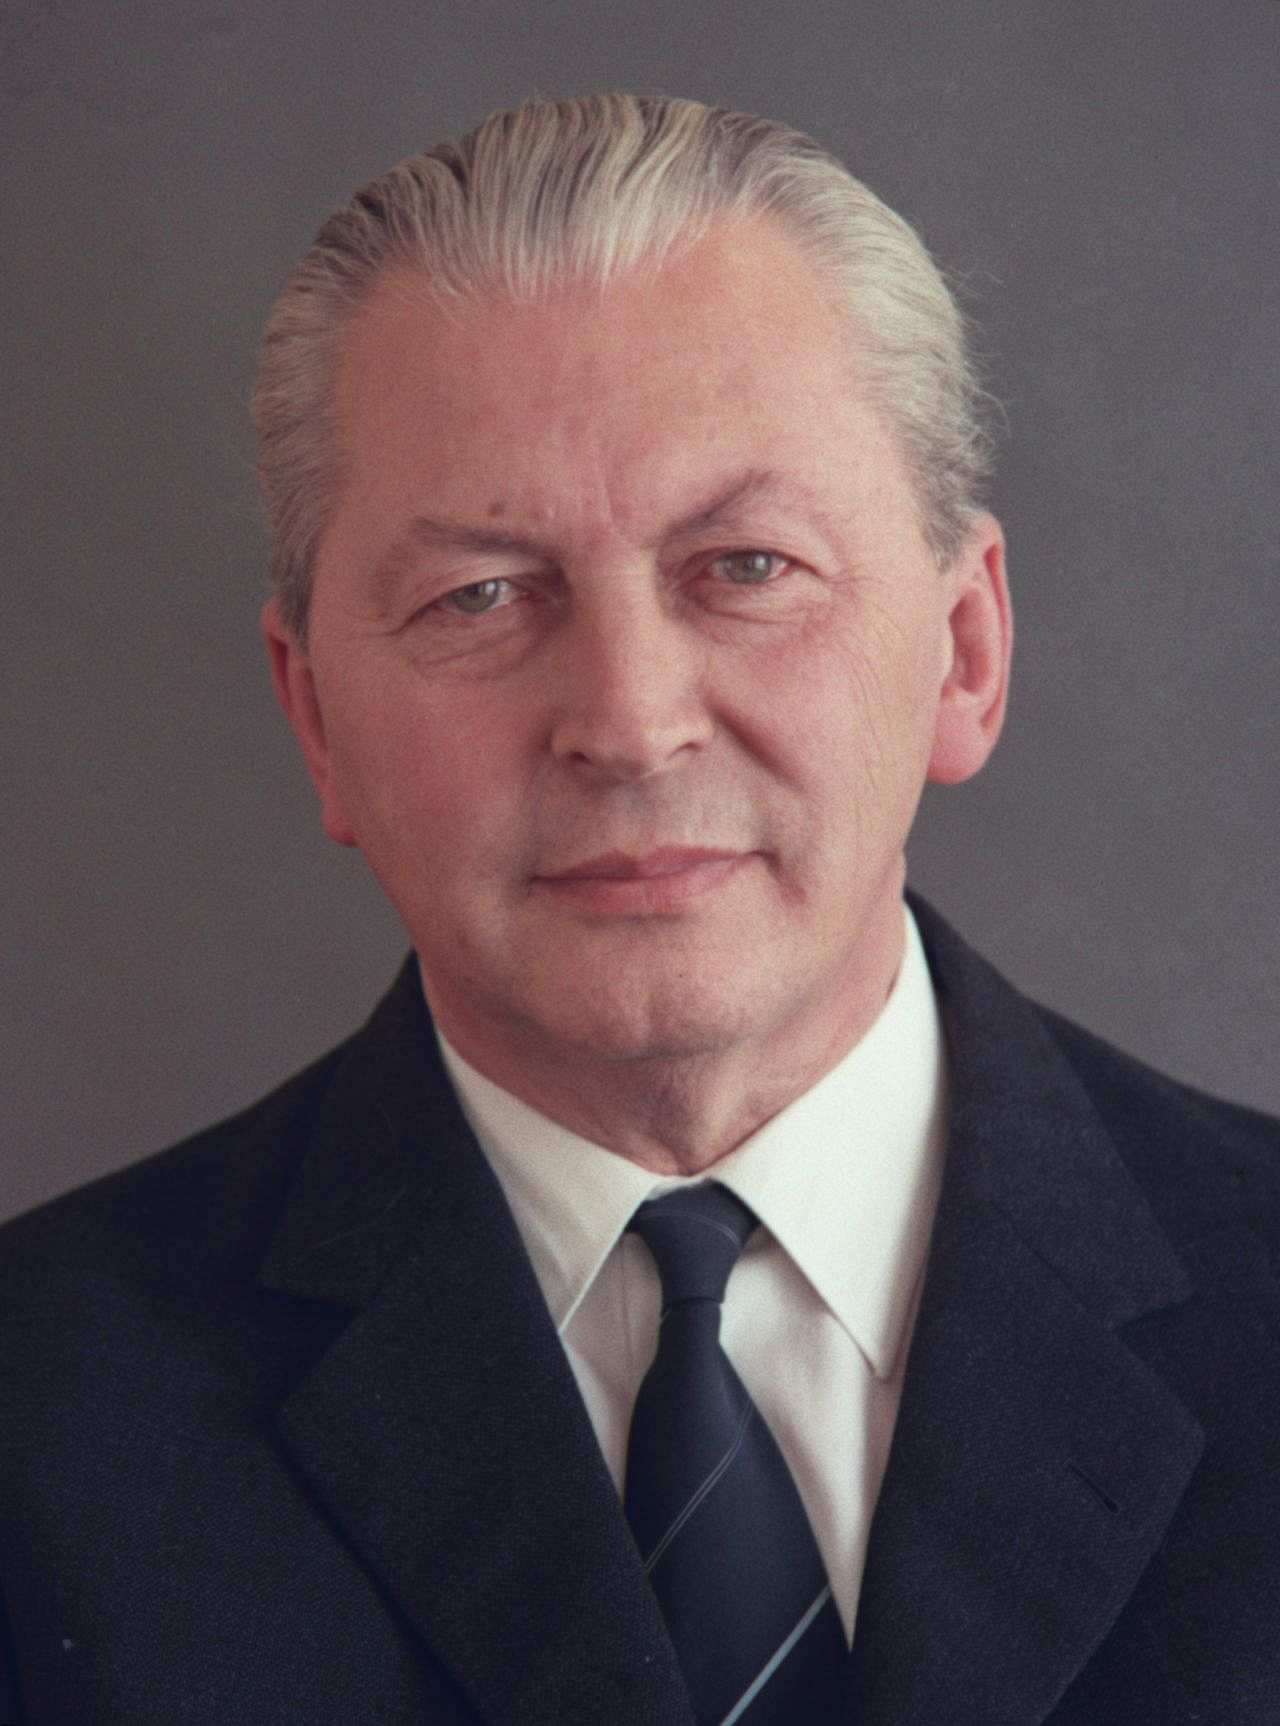 Porträt von Kurt Georg Kiesinger, 1967.